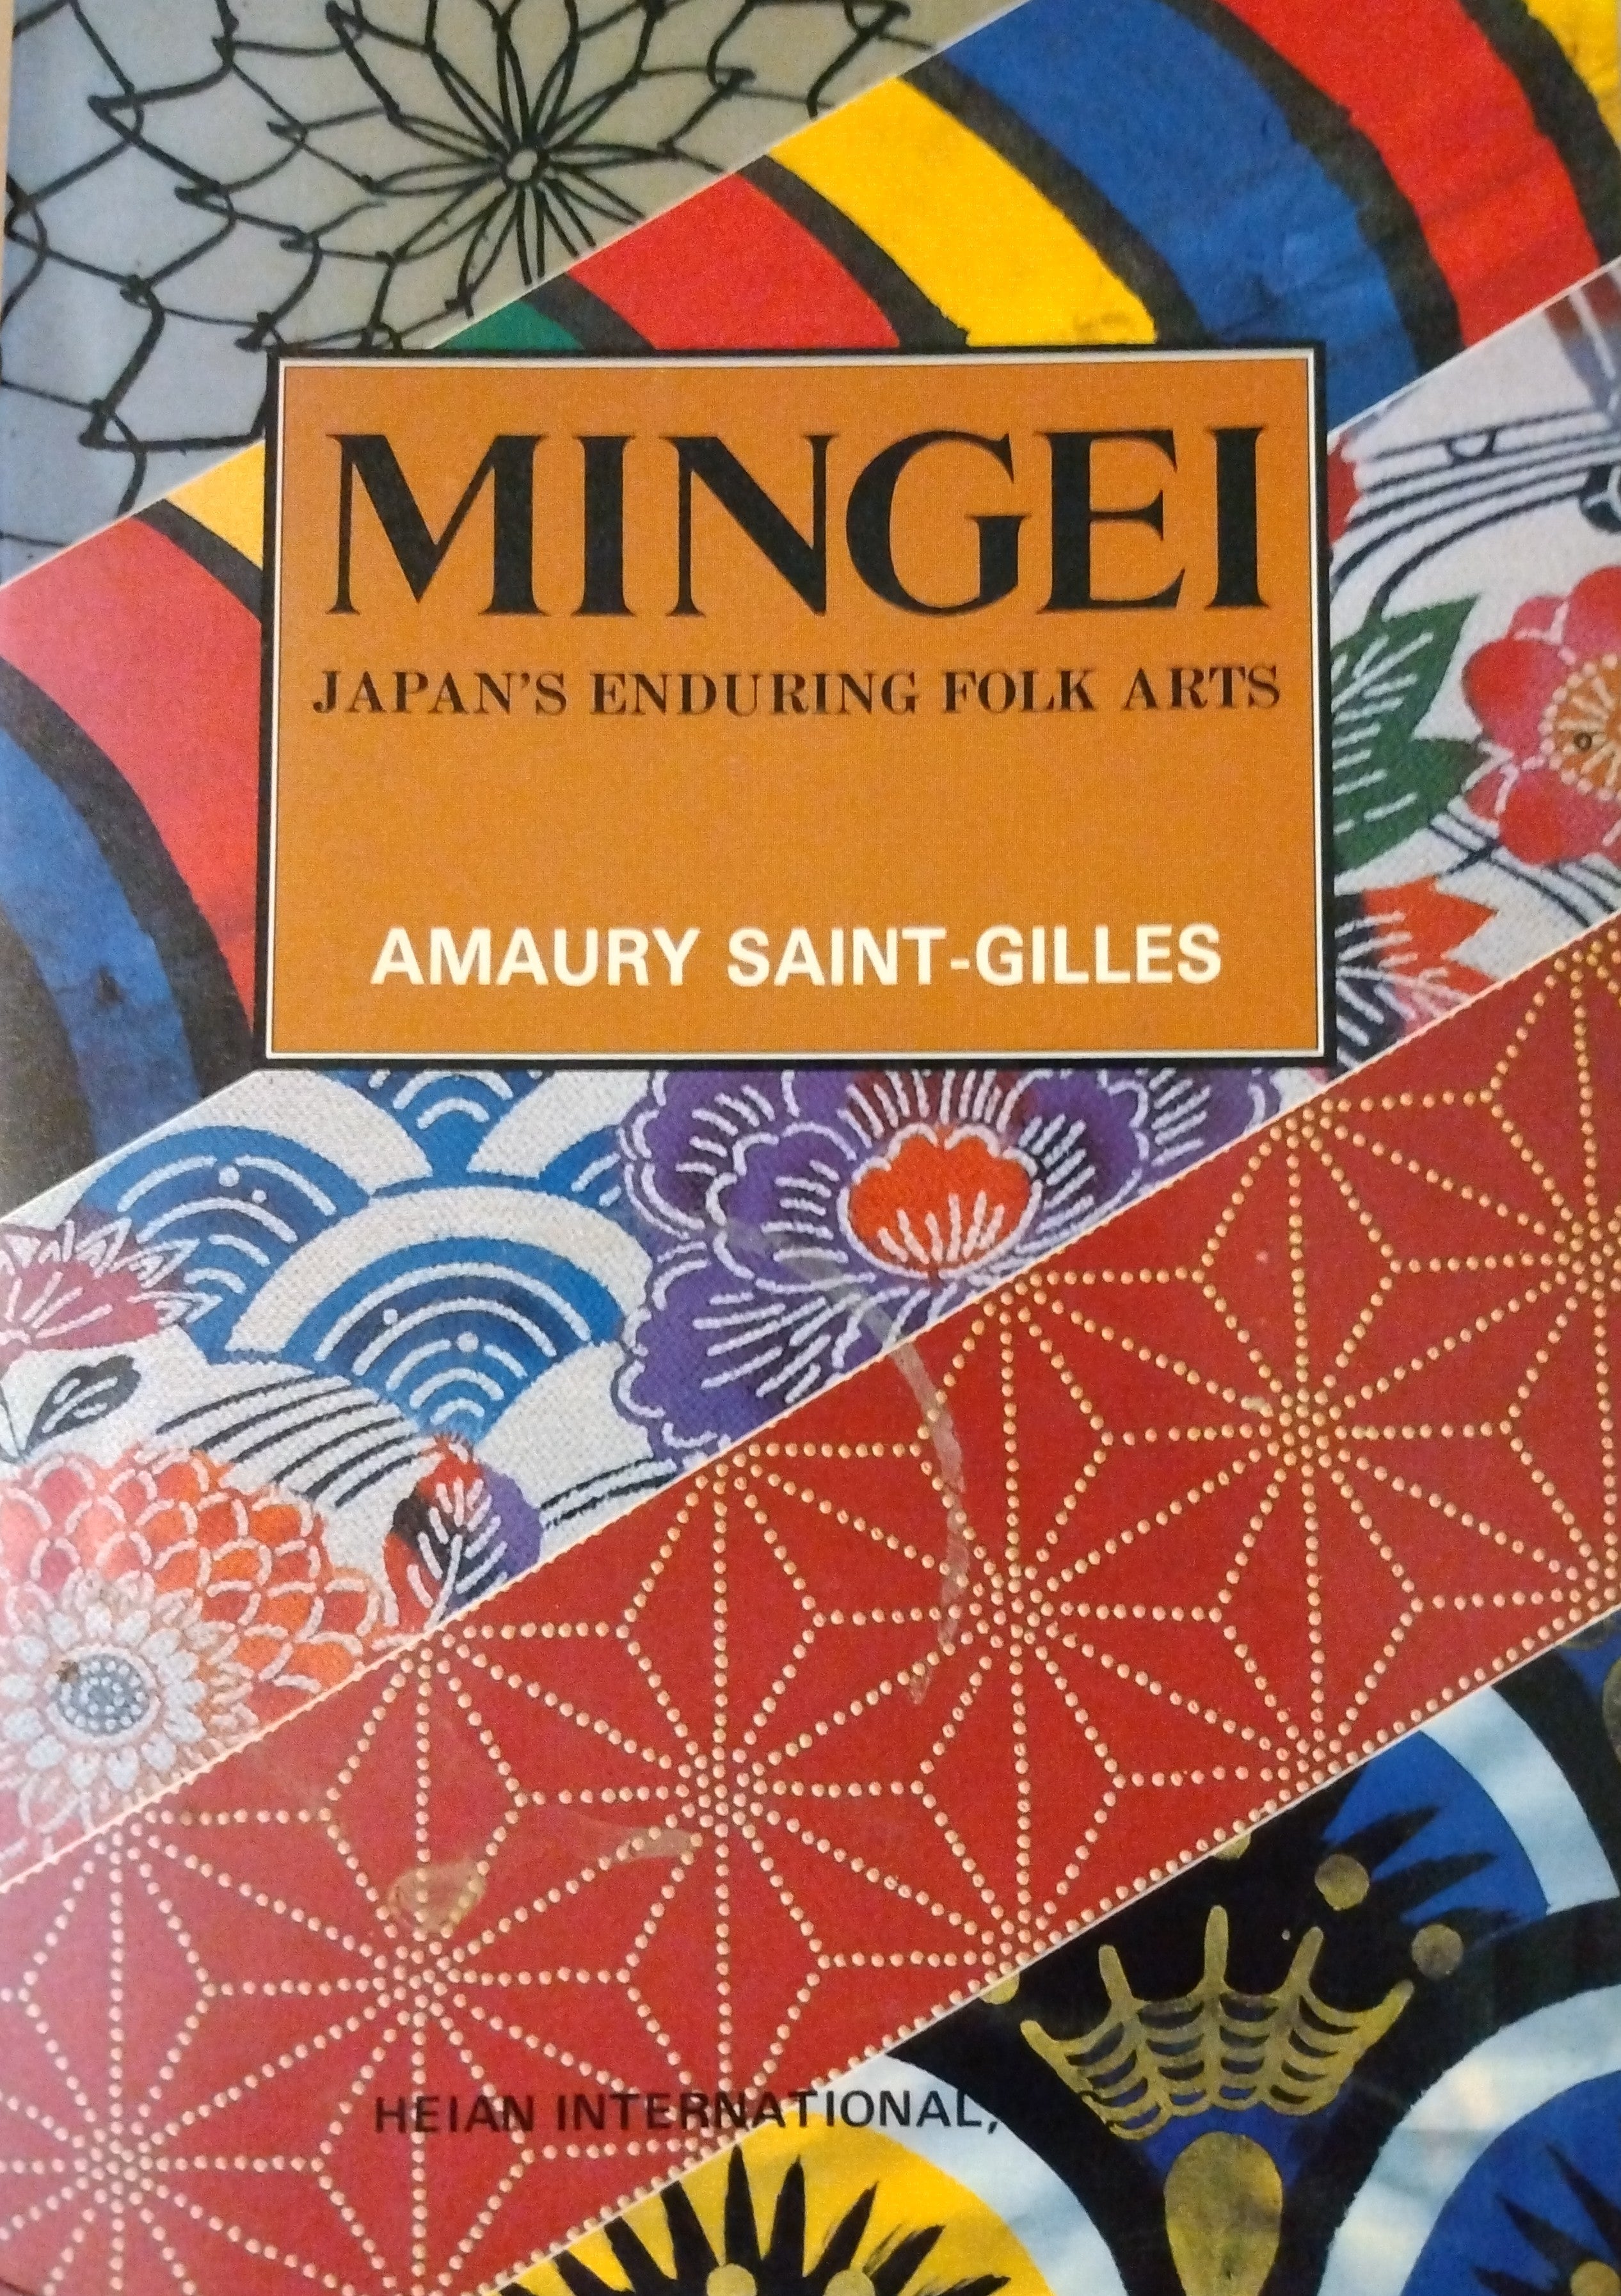 "Mingei: Japan's Enduring Folk Arts", by Maury Saint-Giles; Thiel Collection